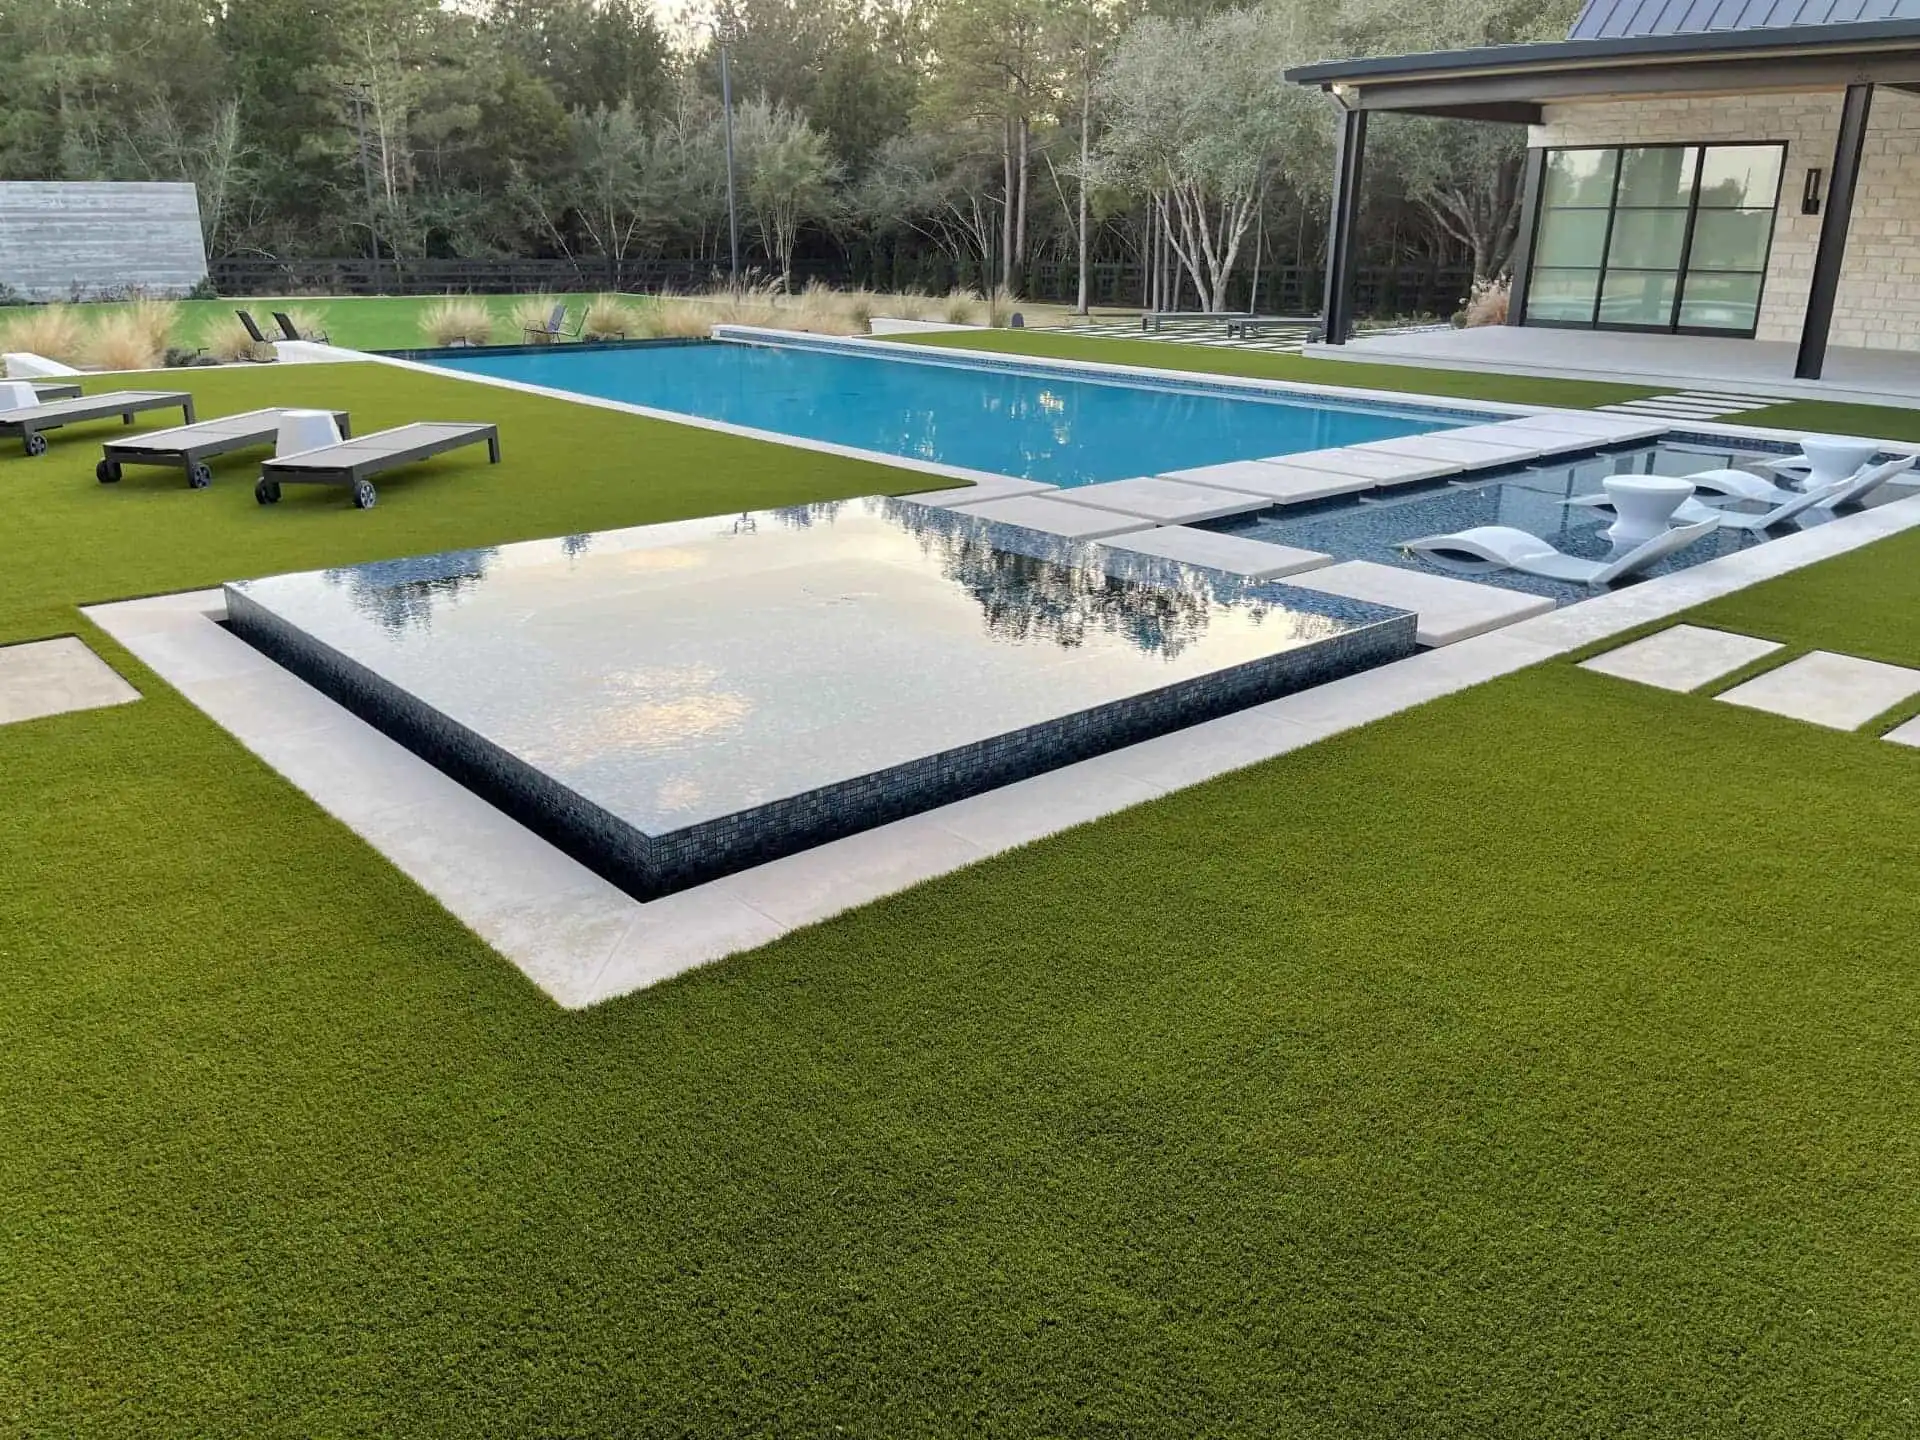 Artificial gras backyard with pool area